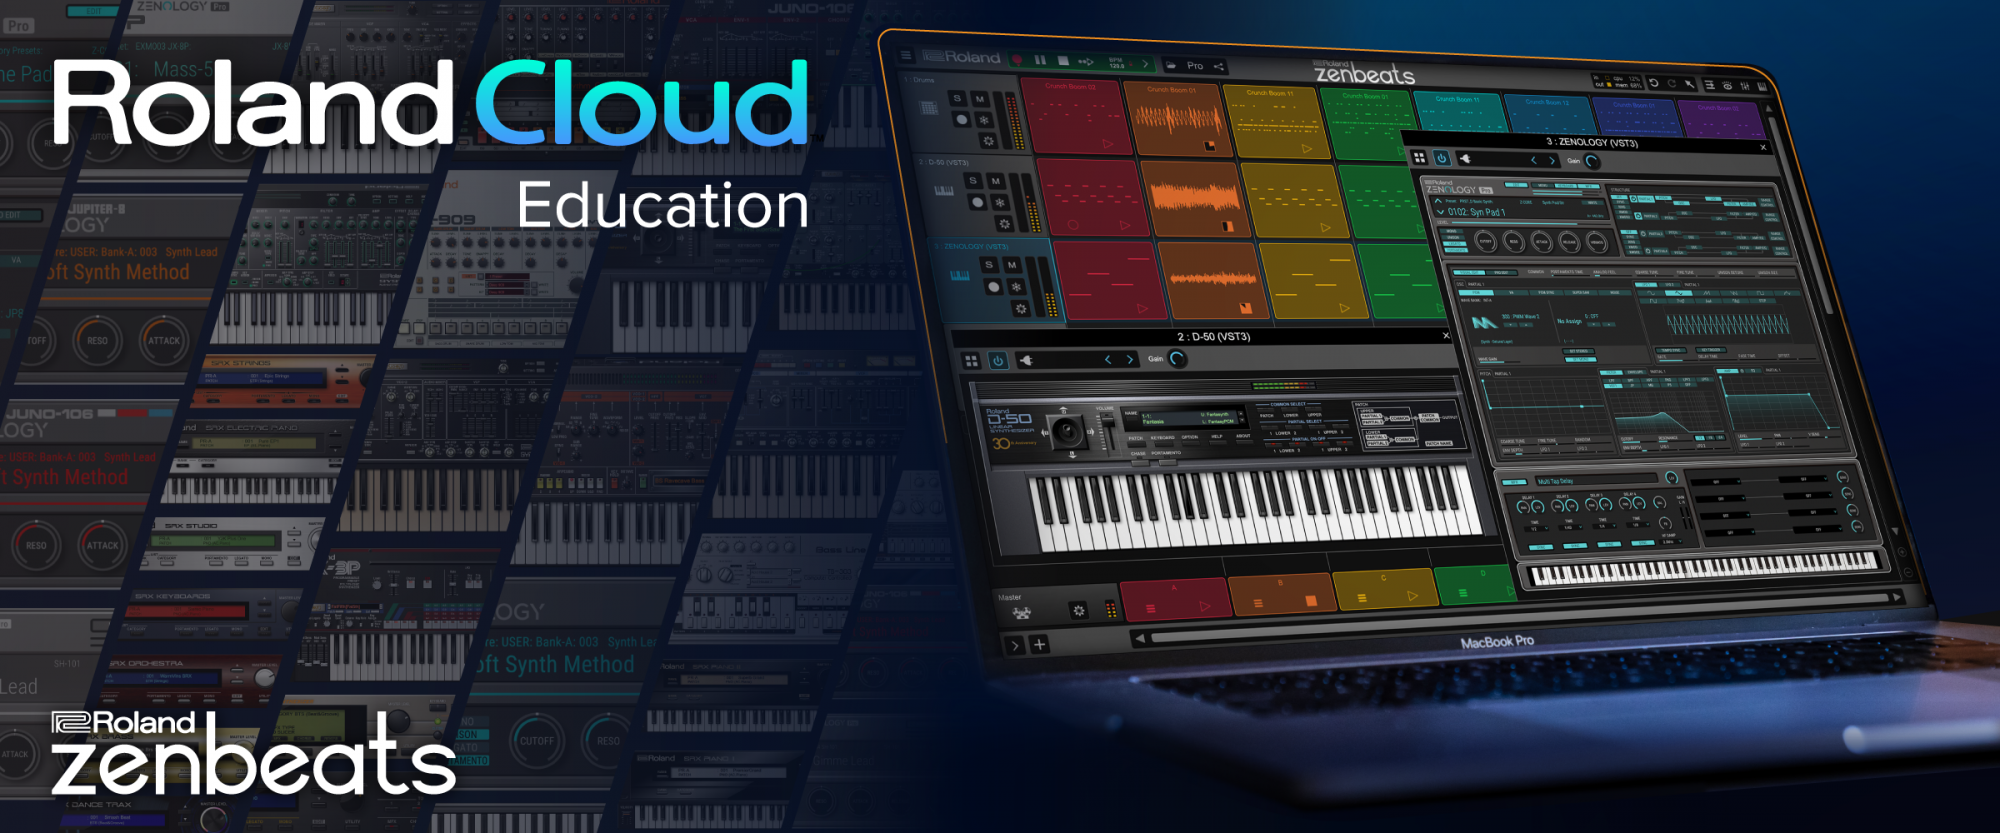 roland-cloud-and-zenbeats-education-v4.png